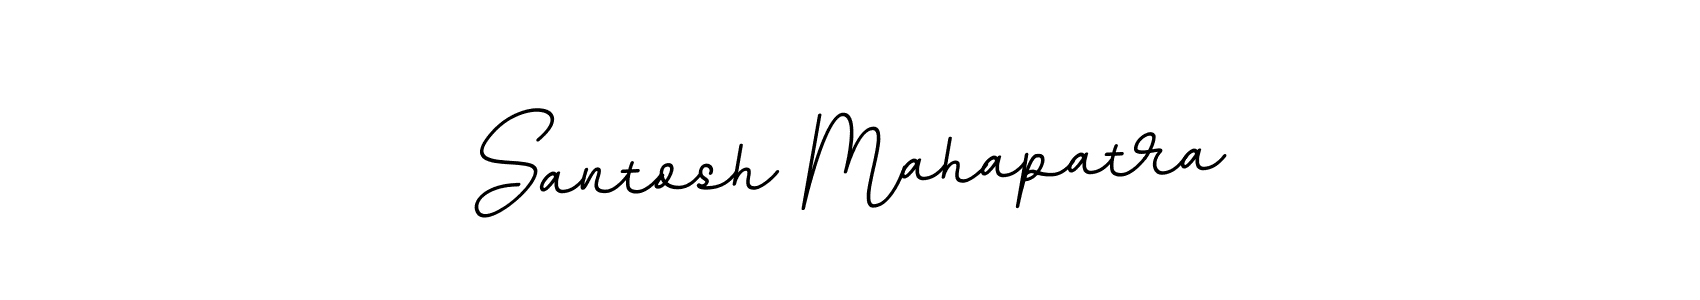 How to Draw Santosh Mahapatra signature style? BallpointsItalic-DORy9 is a latest design signature styles for name Santosh Mahapatra. Santosh Mahapatra signature style 11 images and pictures png